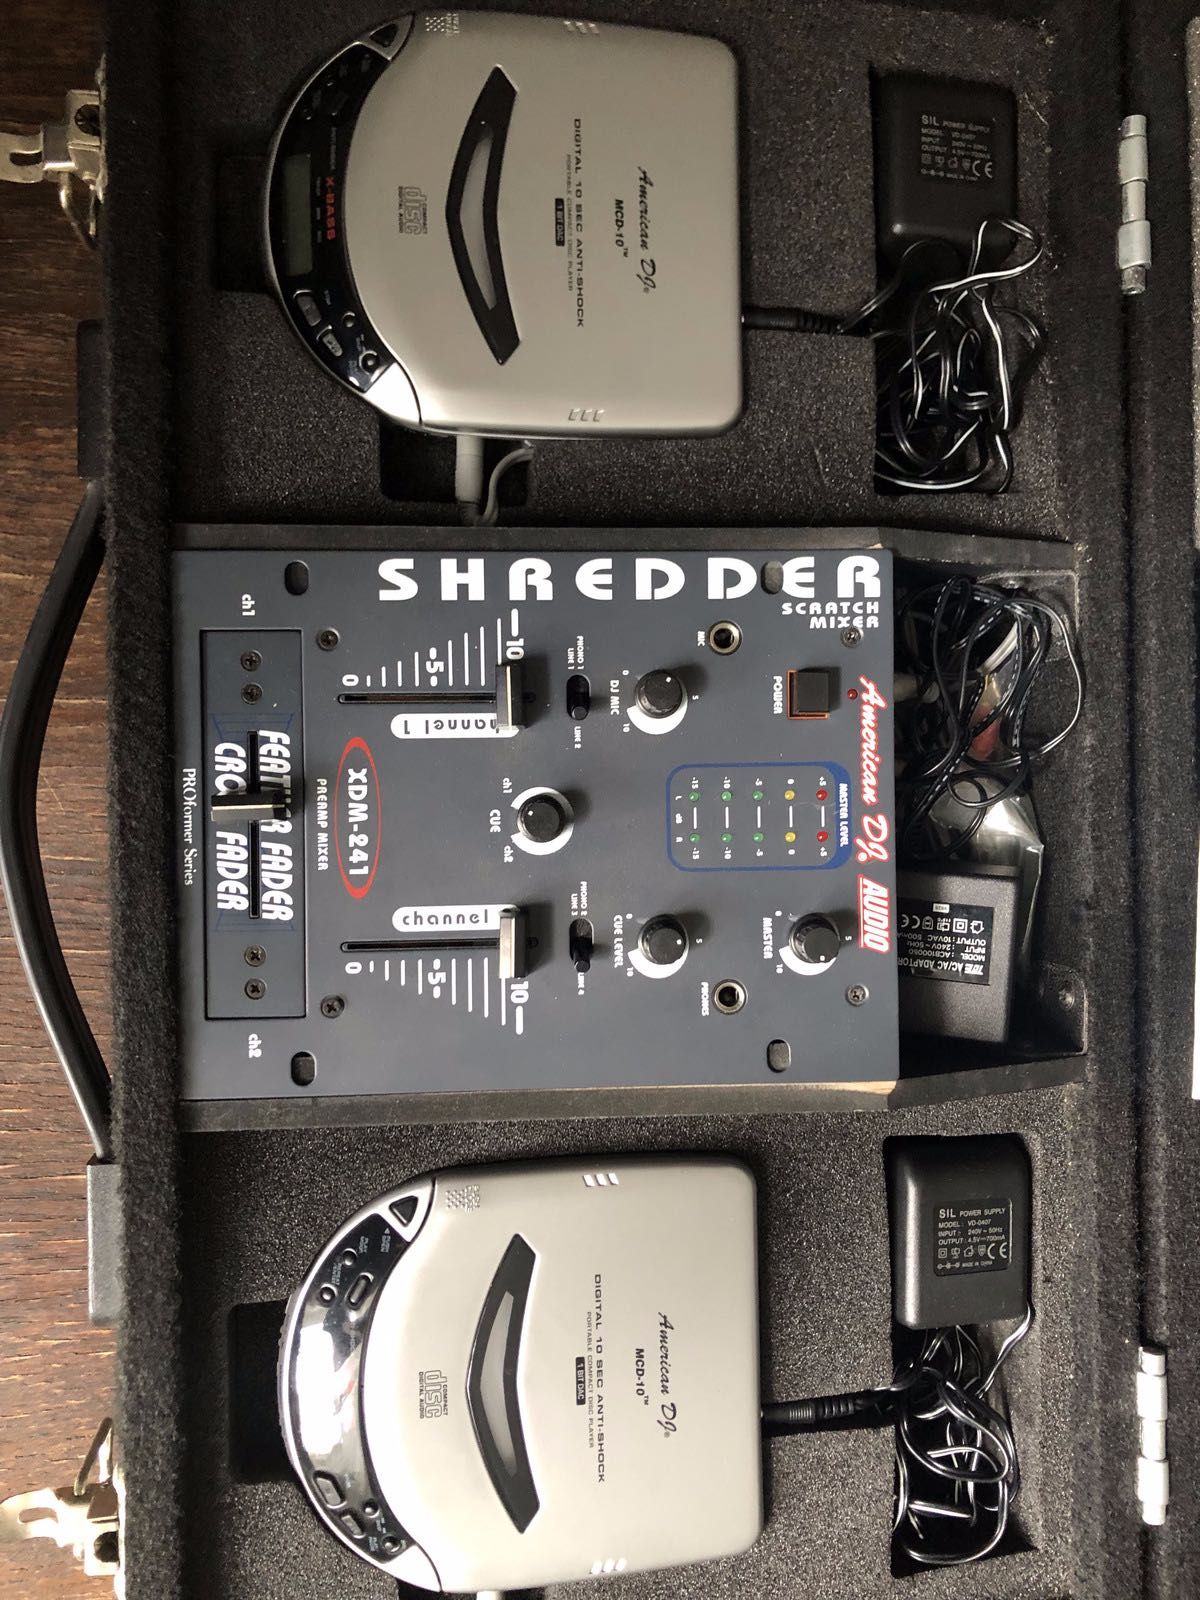 American DJ hard flight case plus XDM - 241 Shredder mixer